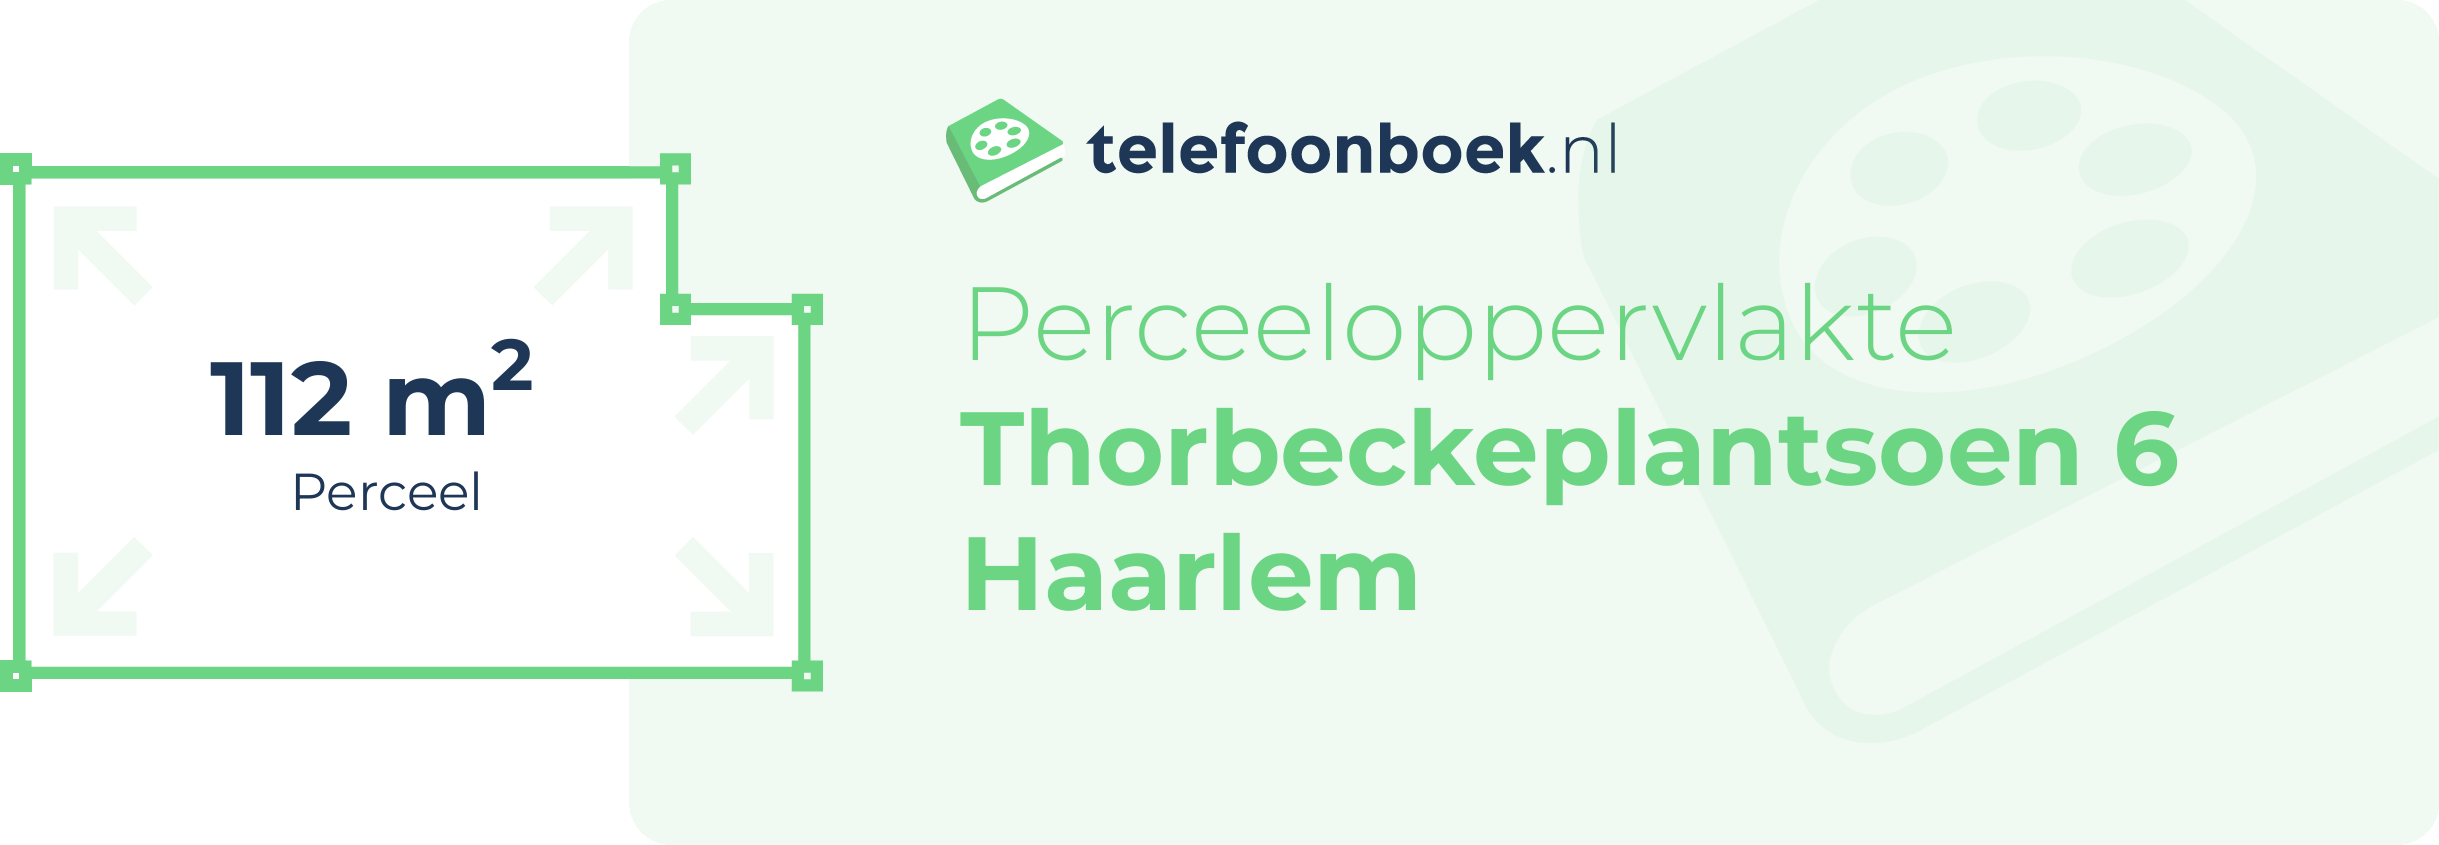 Perceeloppervlakte Thorbeckeplantsoen 6 Haarlem